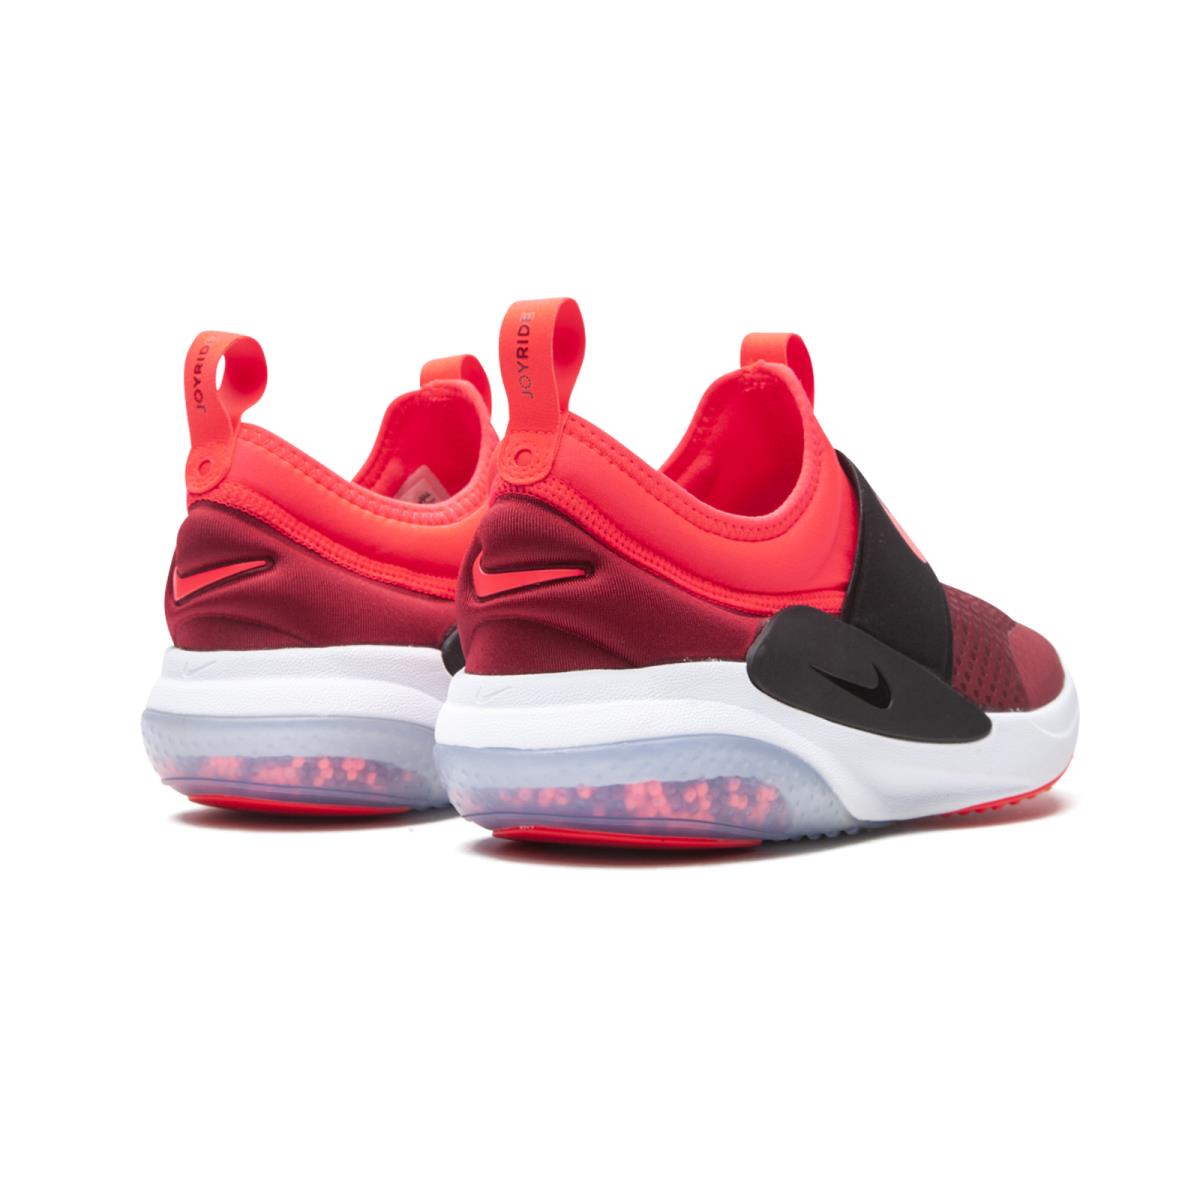 Nike shoes Joyride Nova - Team Red/Red Orbit-Black 8